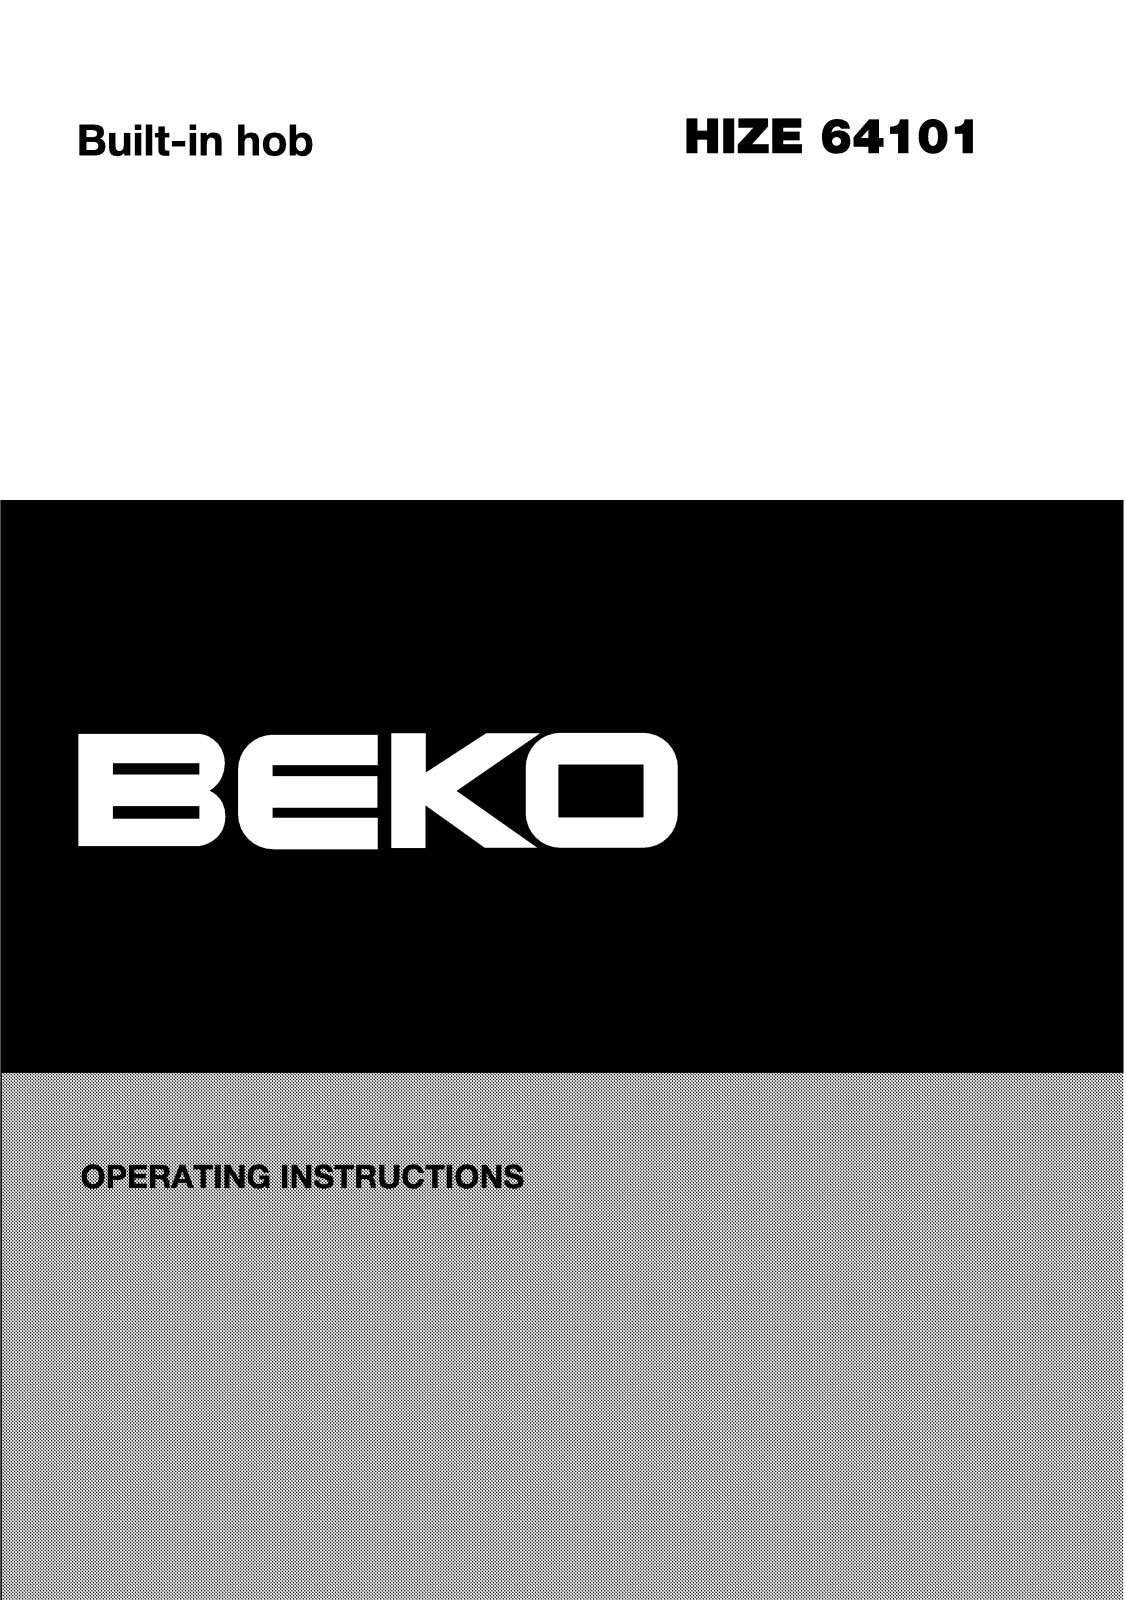 Beko HIZE 64101 User Manual